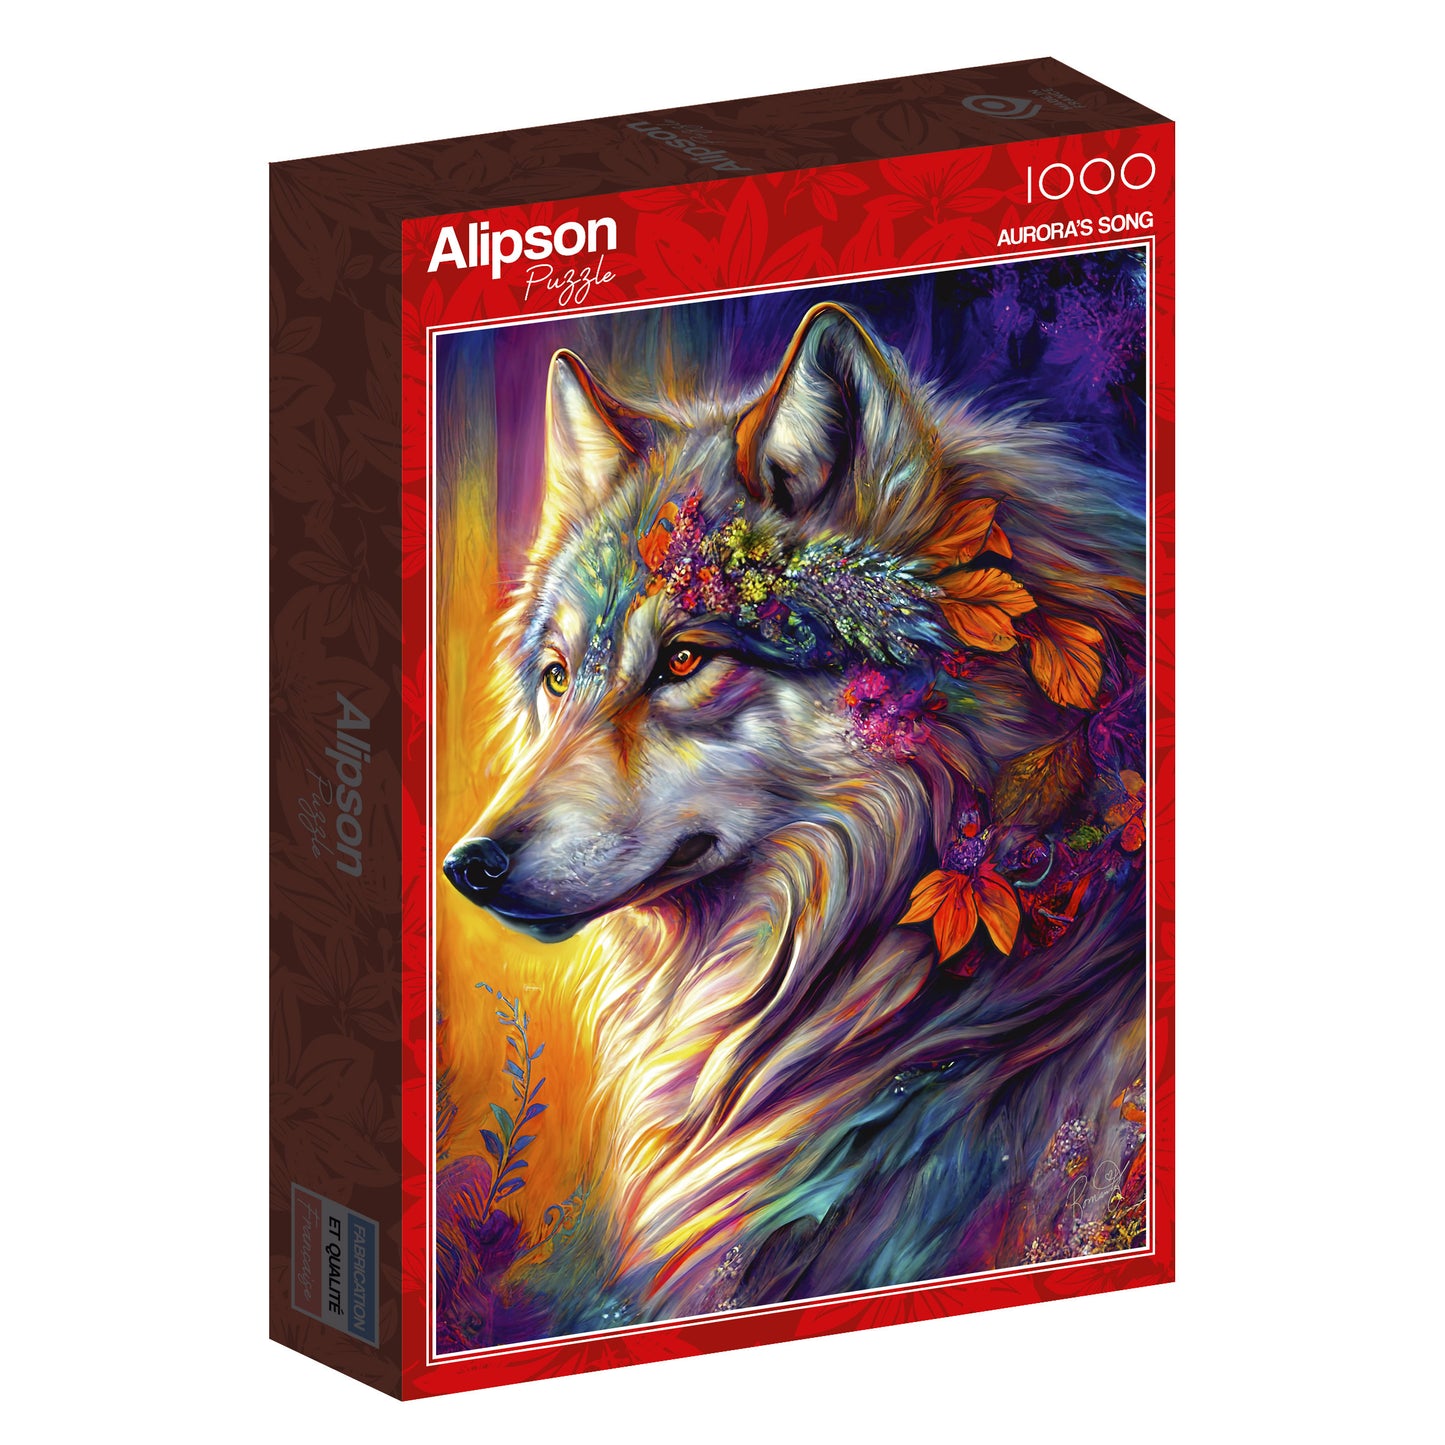 Alipson - Aurora's Song - 1000 Piece Jigsaw Puzzle